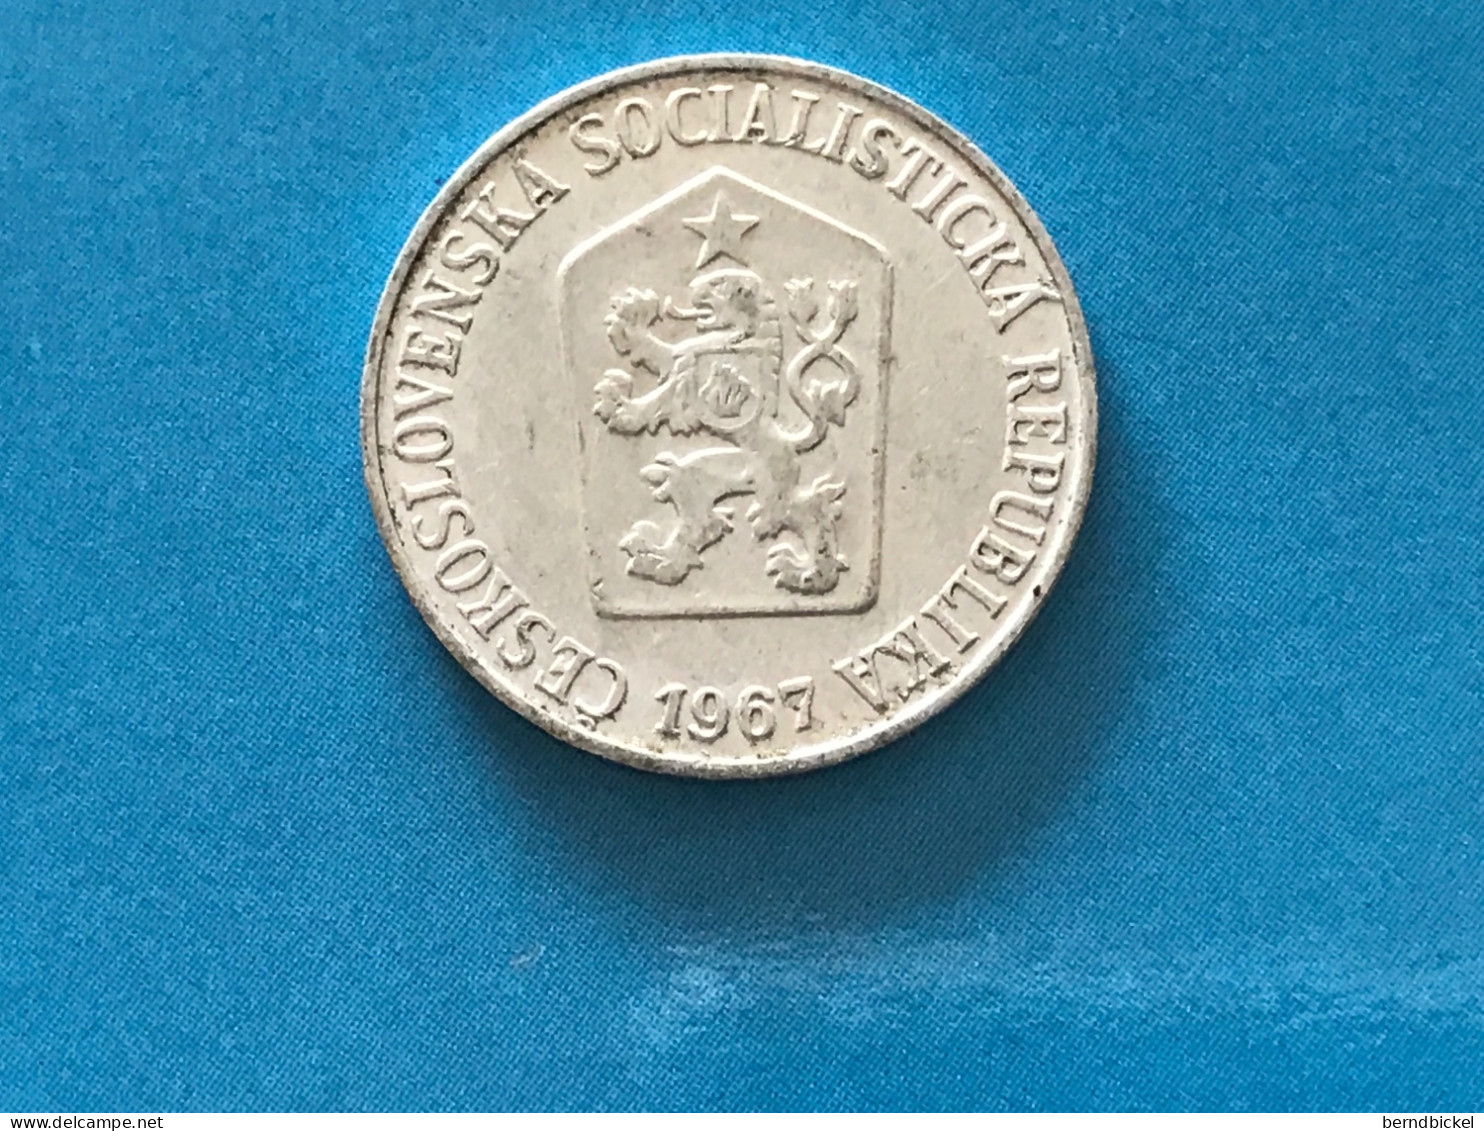 Münze Münzen Umlaufmünze Tschechoslowakei 5 Heller 1967 - Czechoslovakia